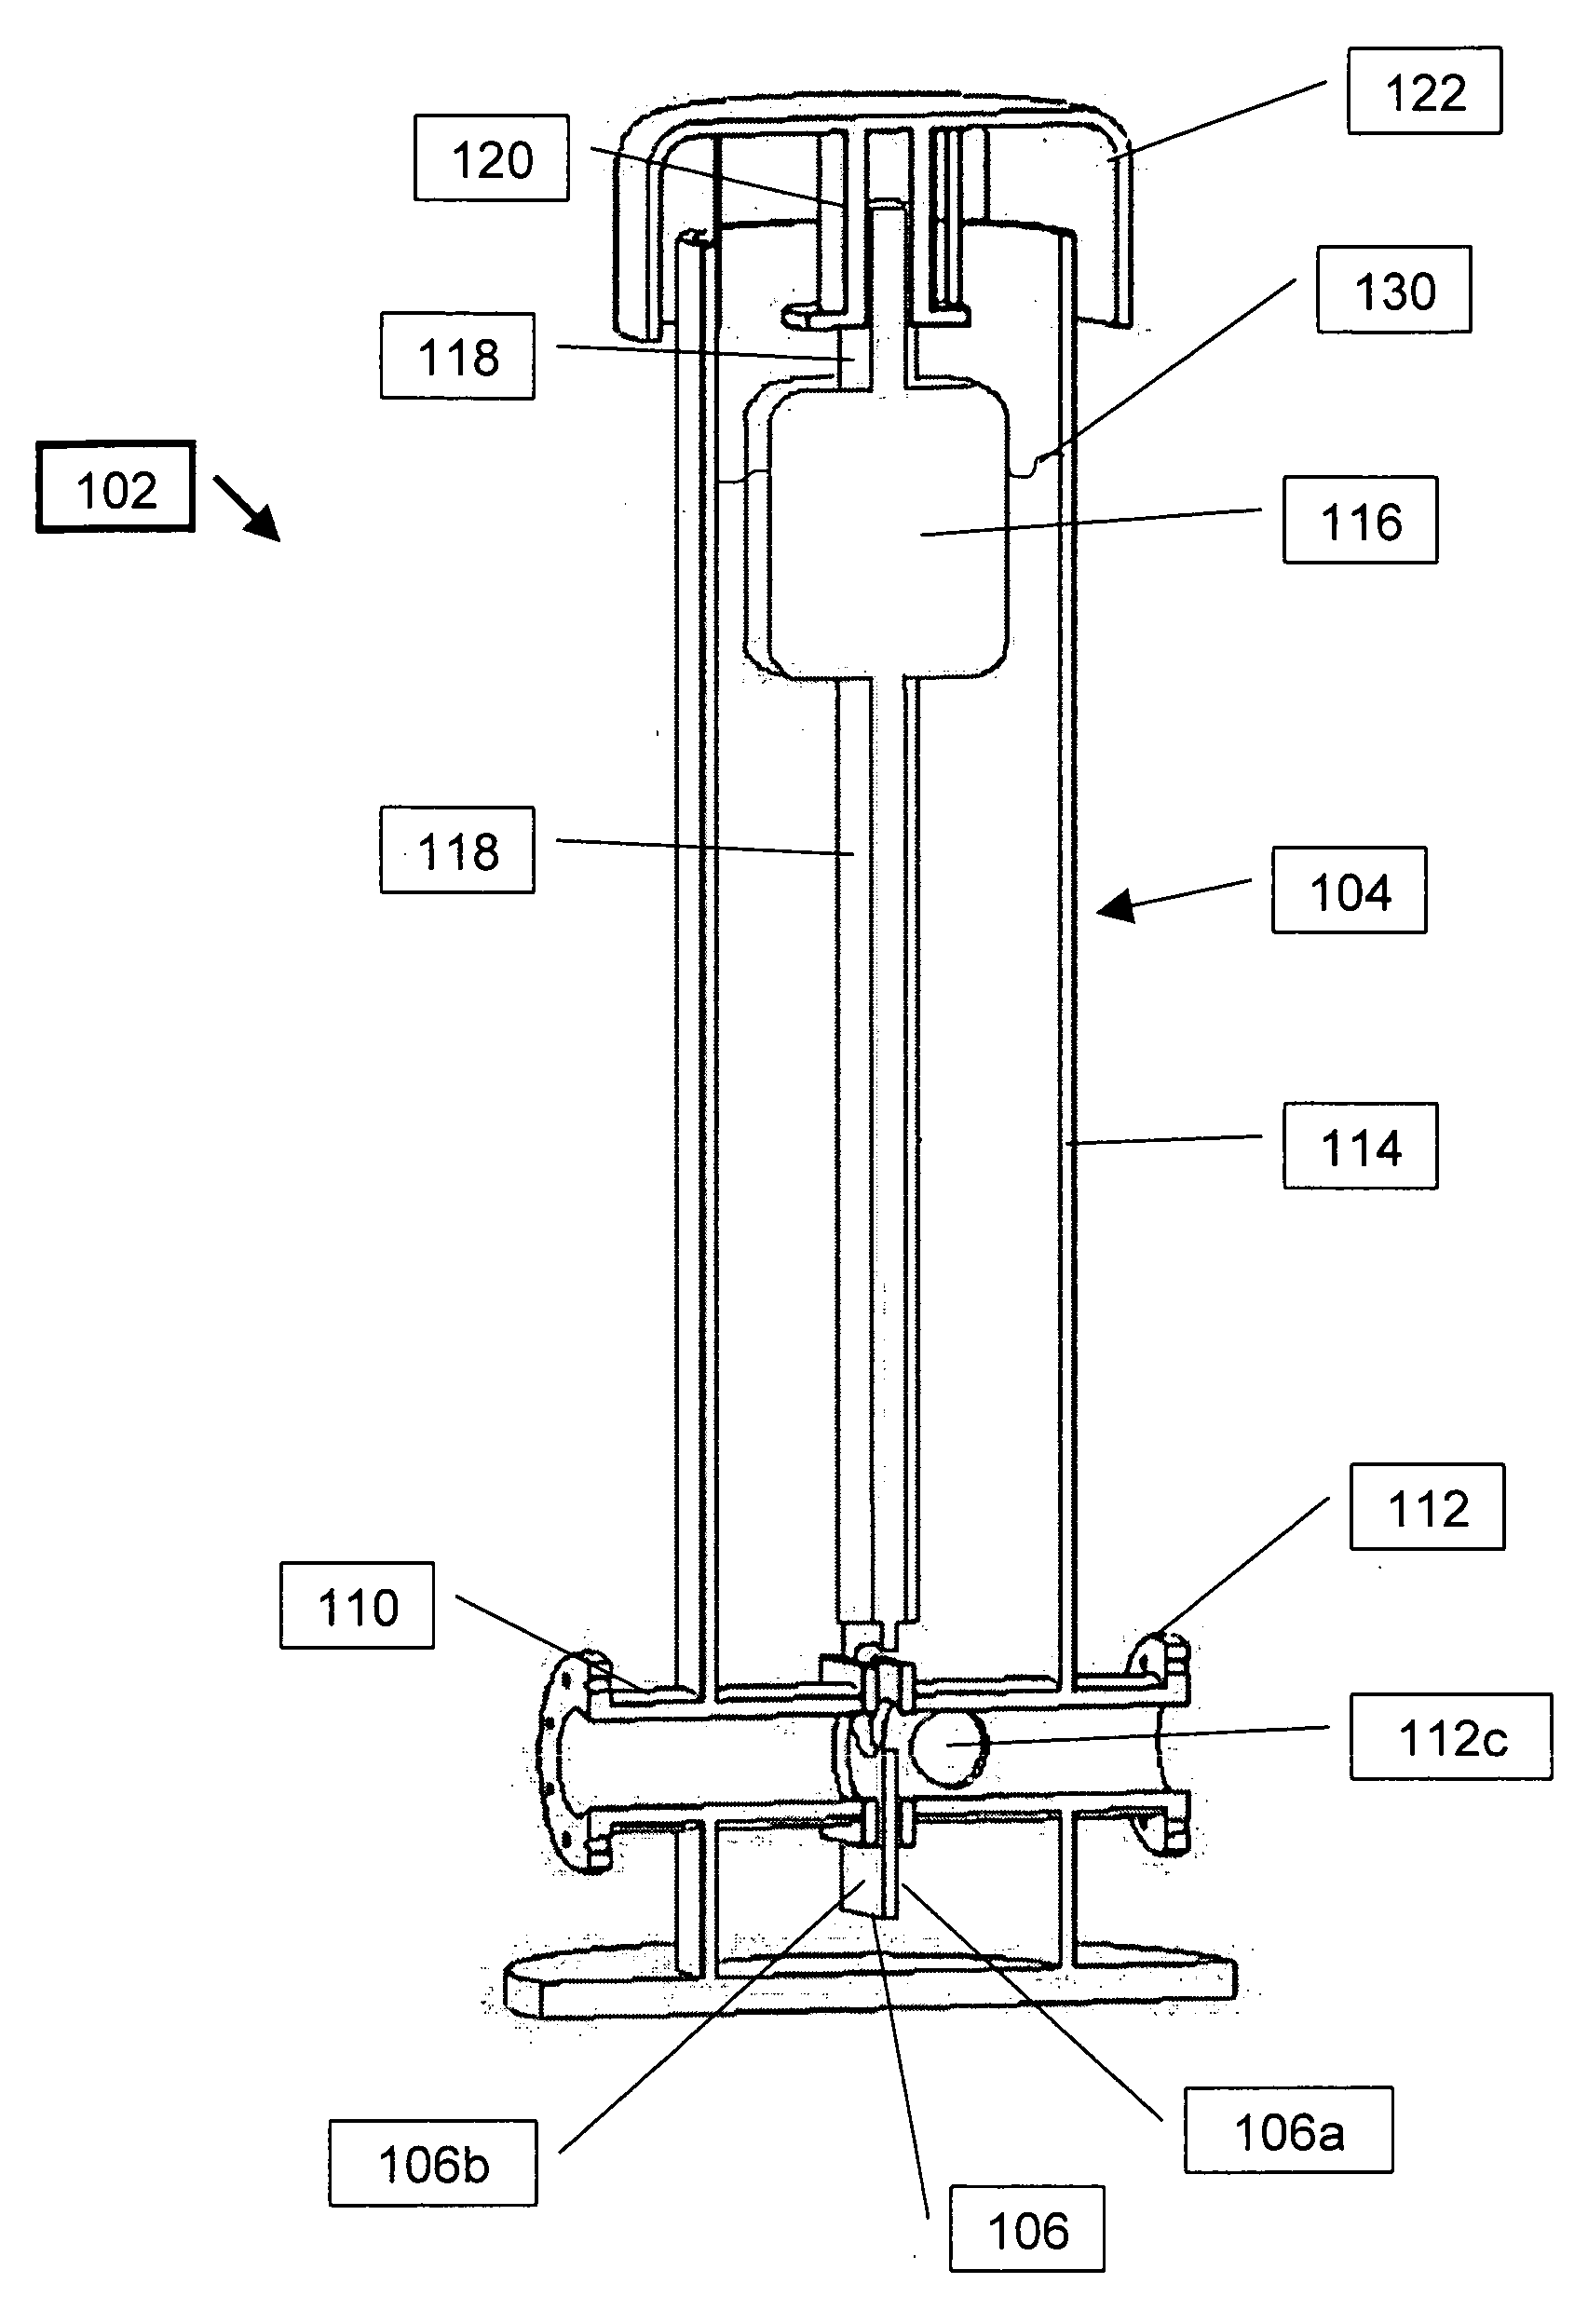 Standpipe direct float valve